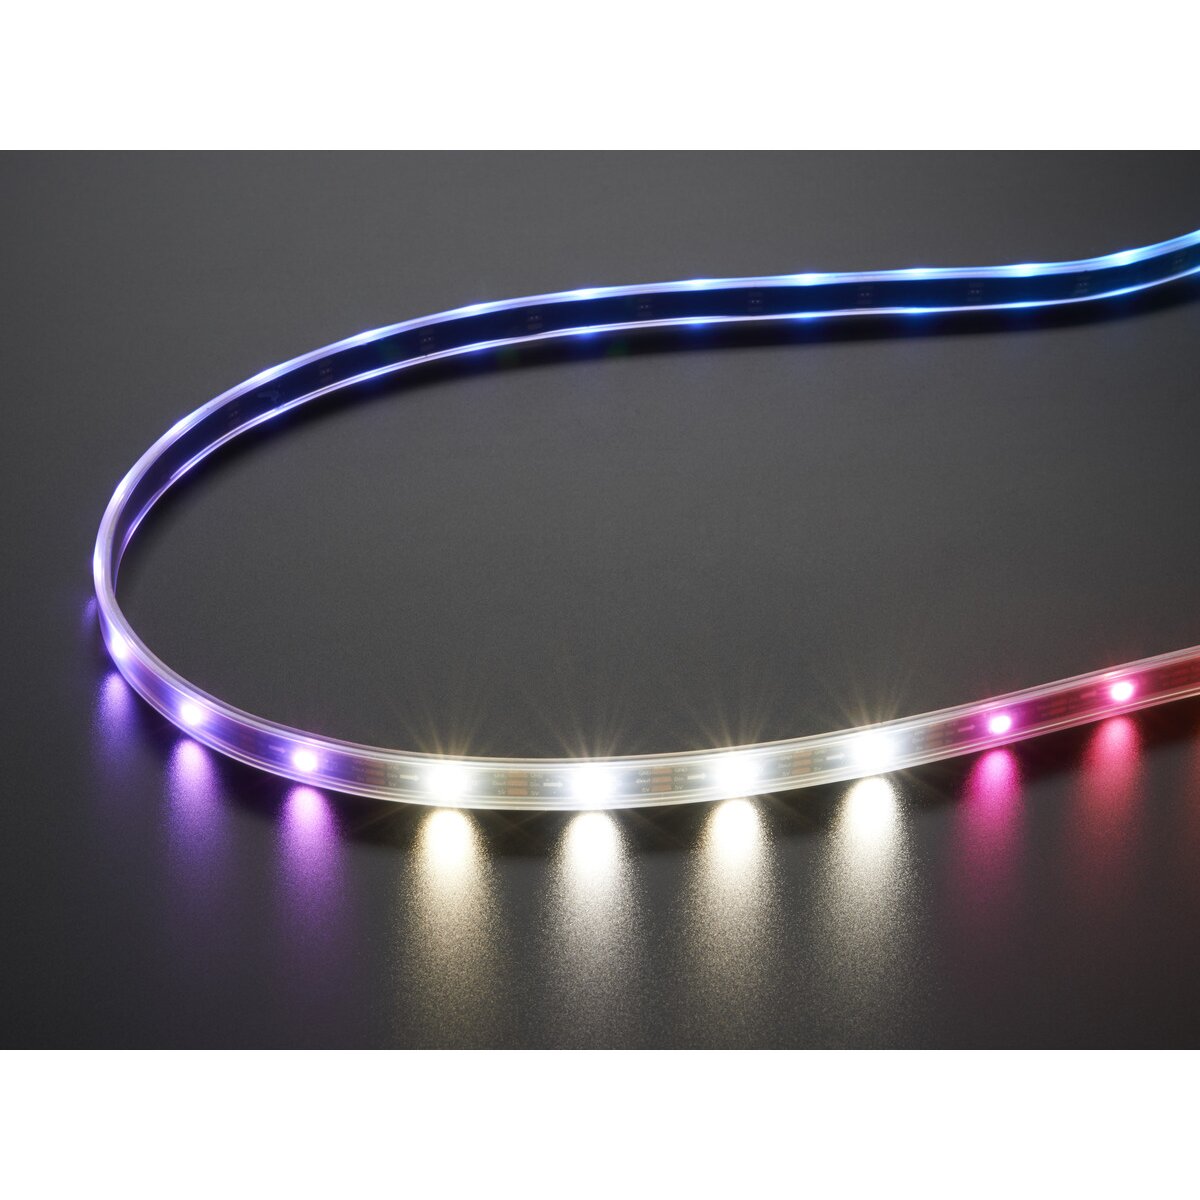 Pololu - Addressable High-Density RGB 72-LED Strip, 5V, 0.5m (SK6812)